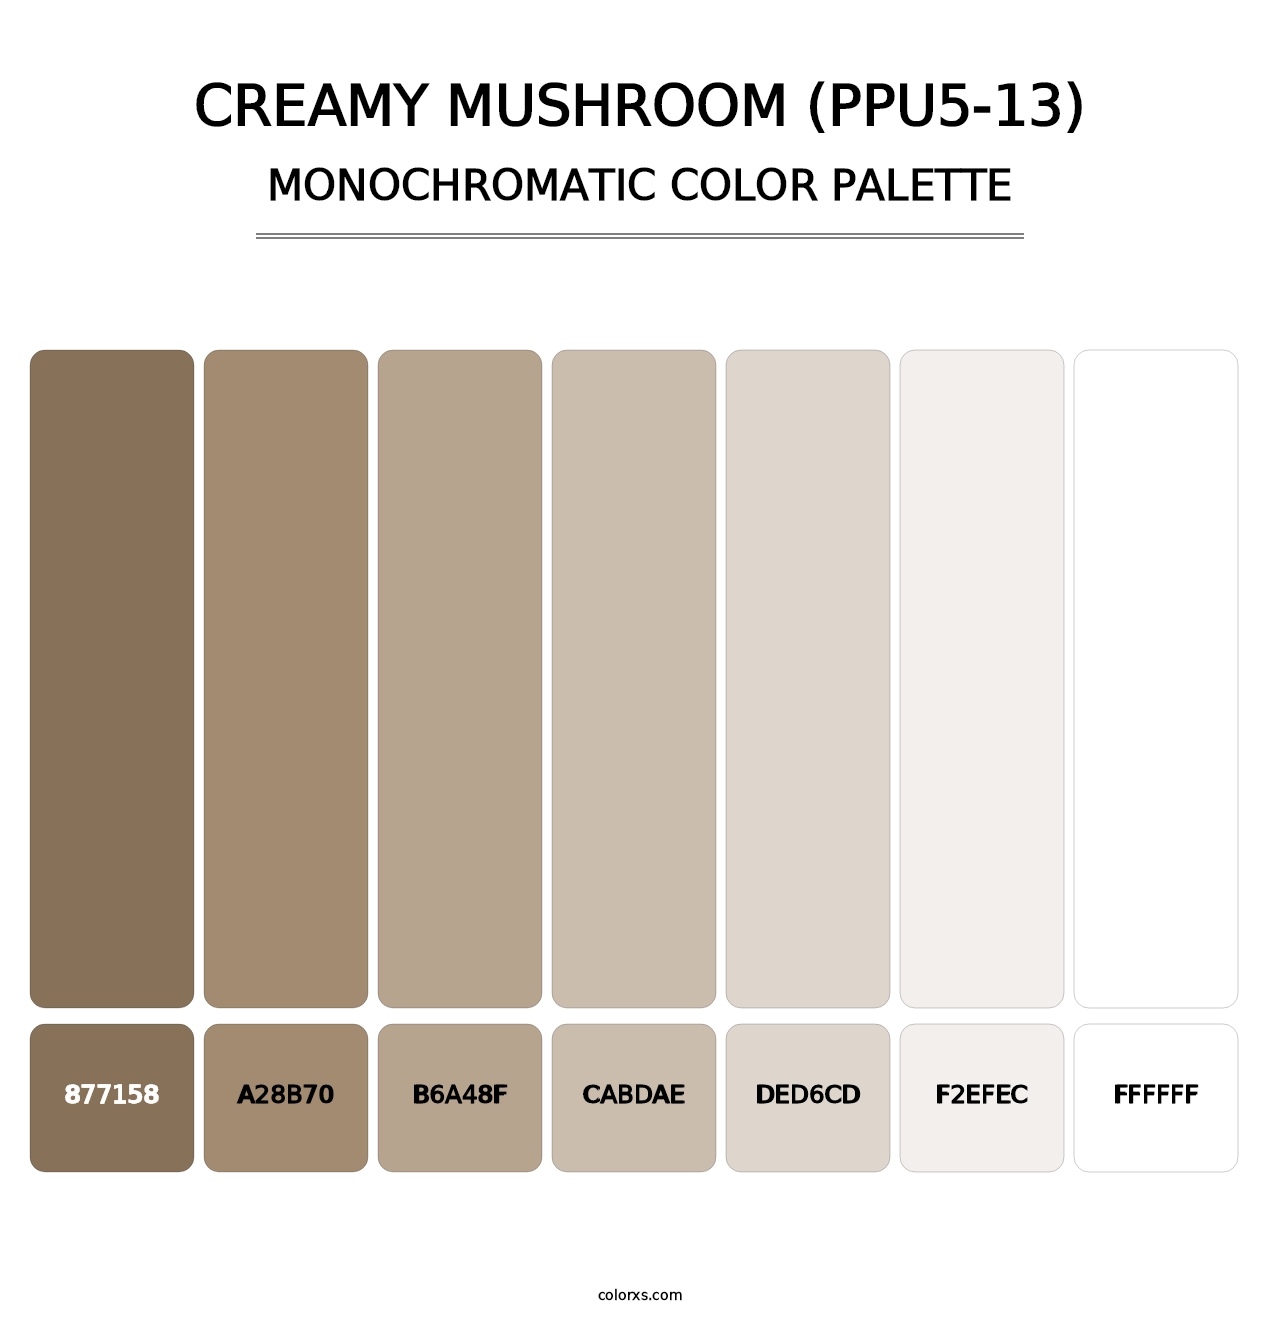 Creamy Mushroom (PPU5-13) - Monochromatic Color Palette